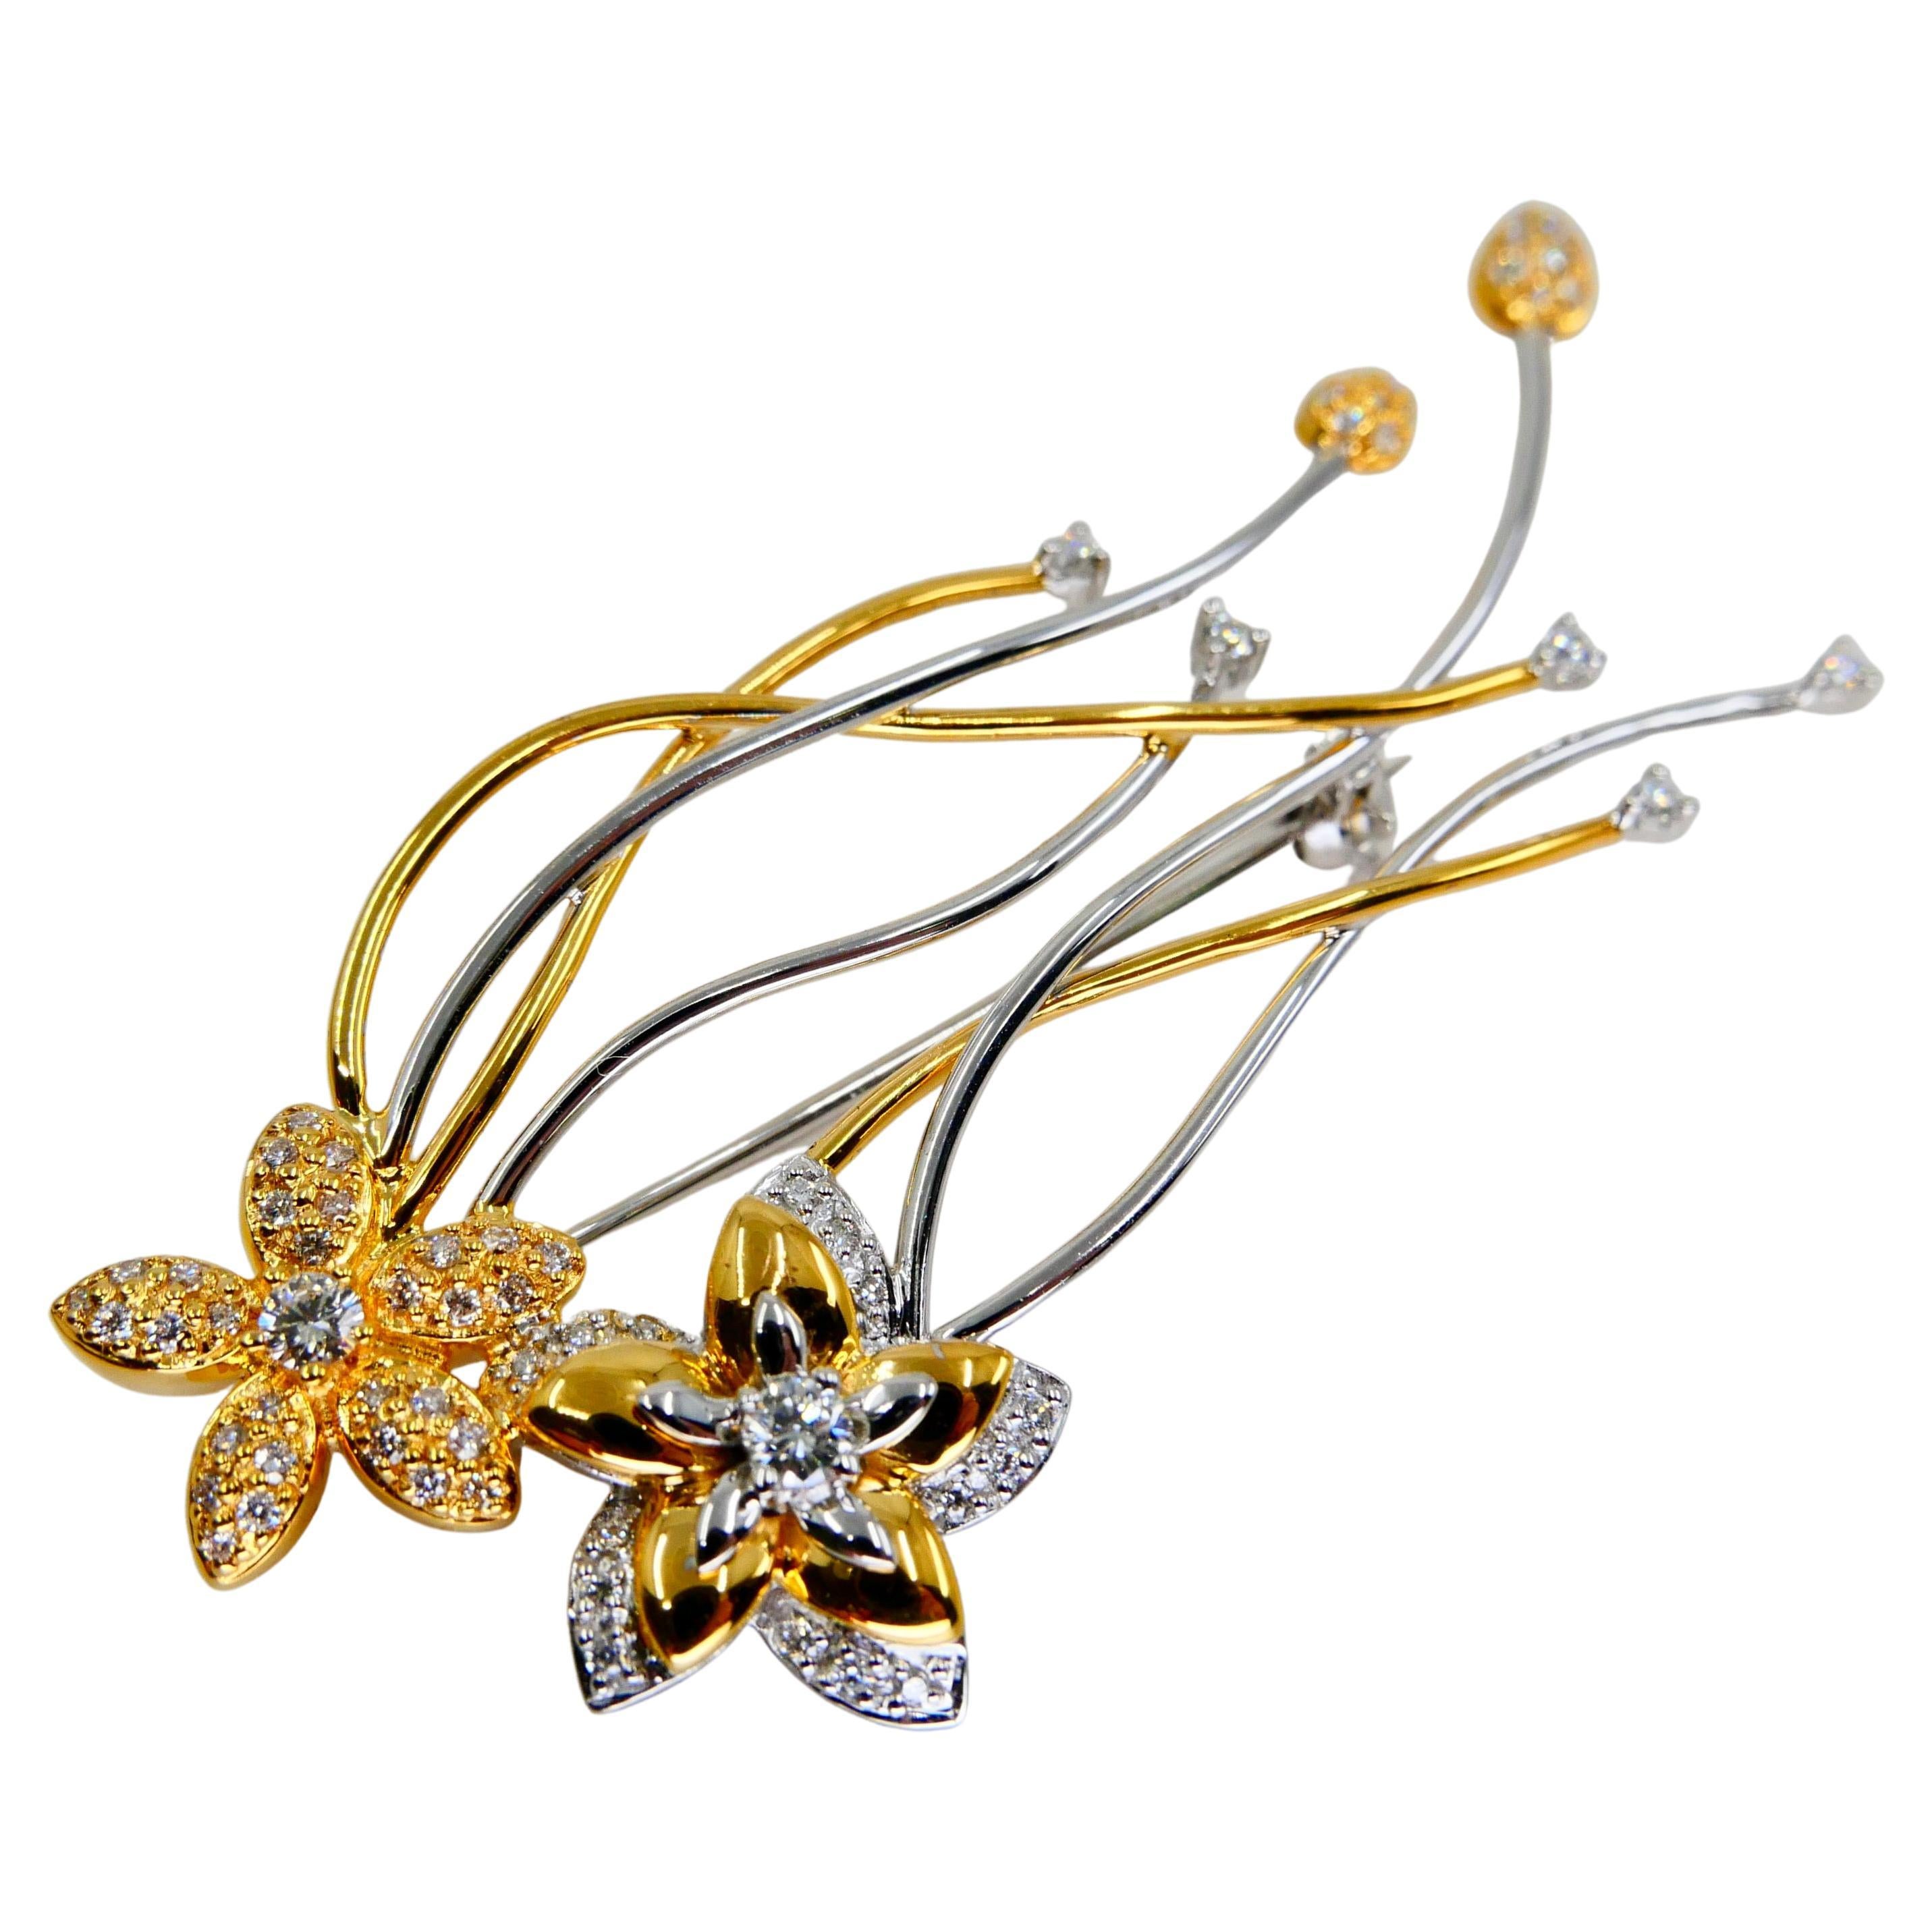 18K Two Tone White & Yellow Gold, Diamond Flower Brooch, Beautiful Workmanship